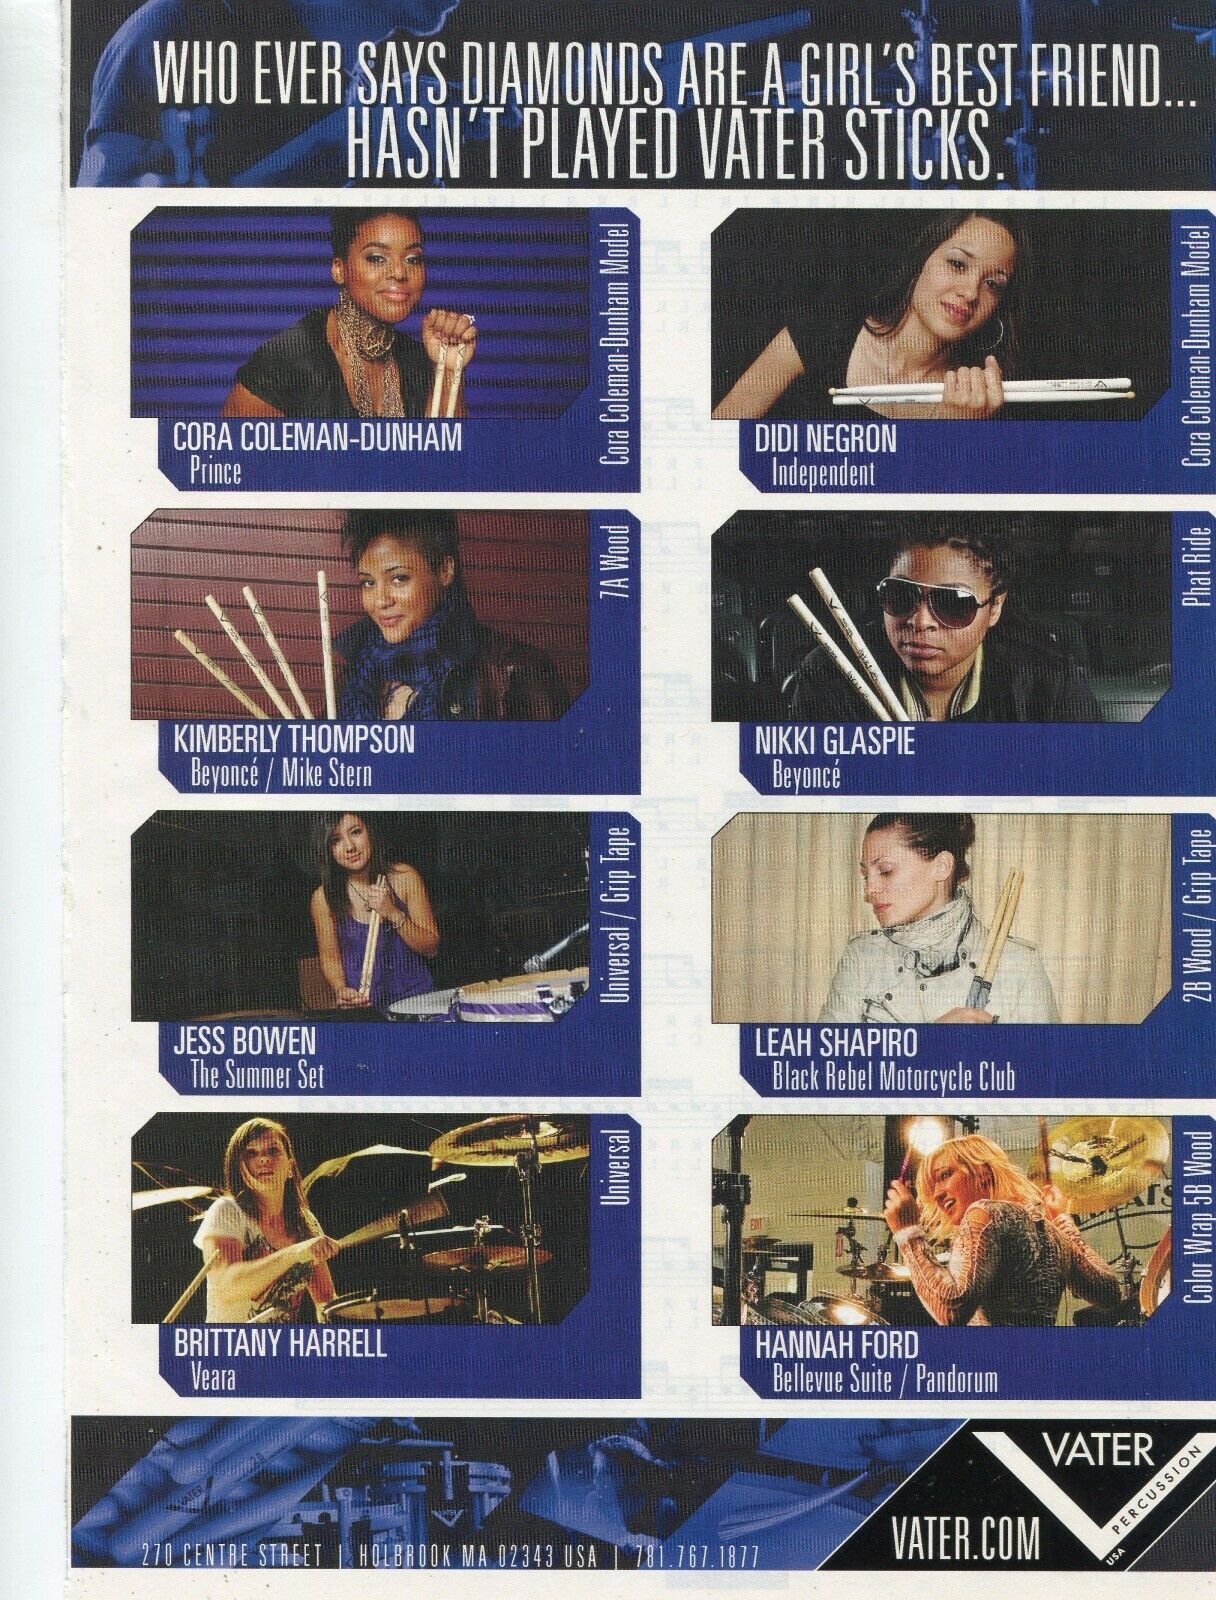 2010 Print Ad of Vater Drumsticks w Hannah Ford, Cora Coleman-Dunham, Jess Bowen